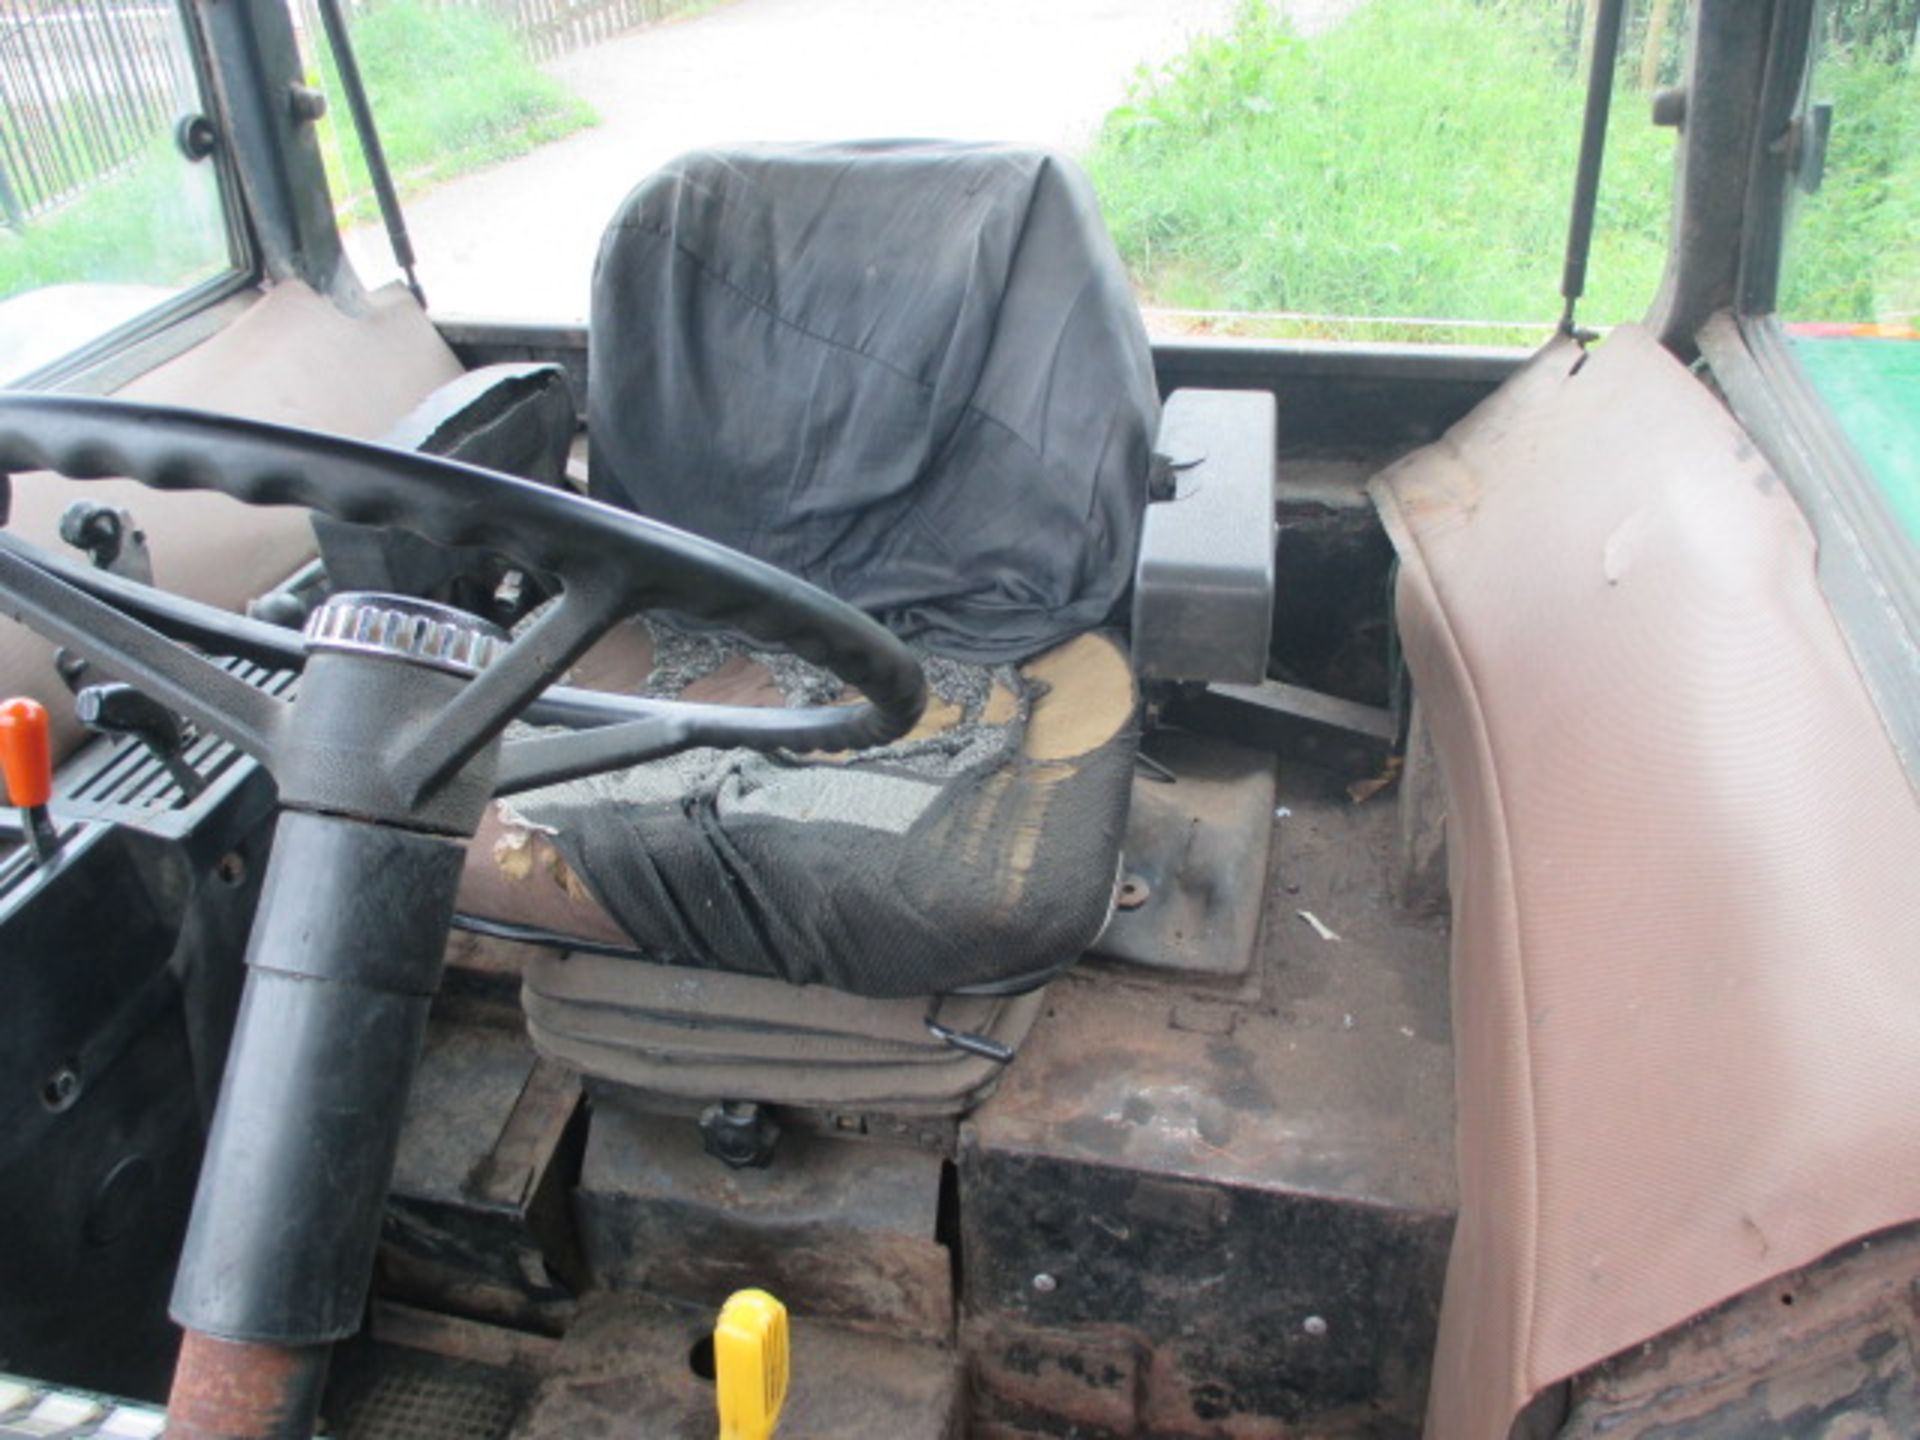 John Deere 2140 4wd Tractor c/w SG2 Cab. First registered 01/05/1985 Reg. No. B806 WSR - Image 7 of 8